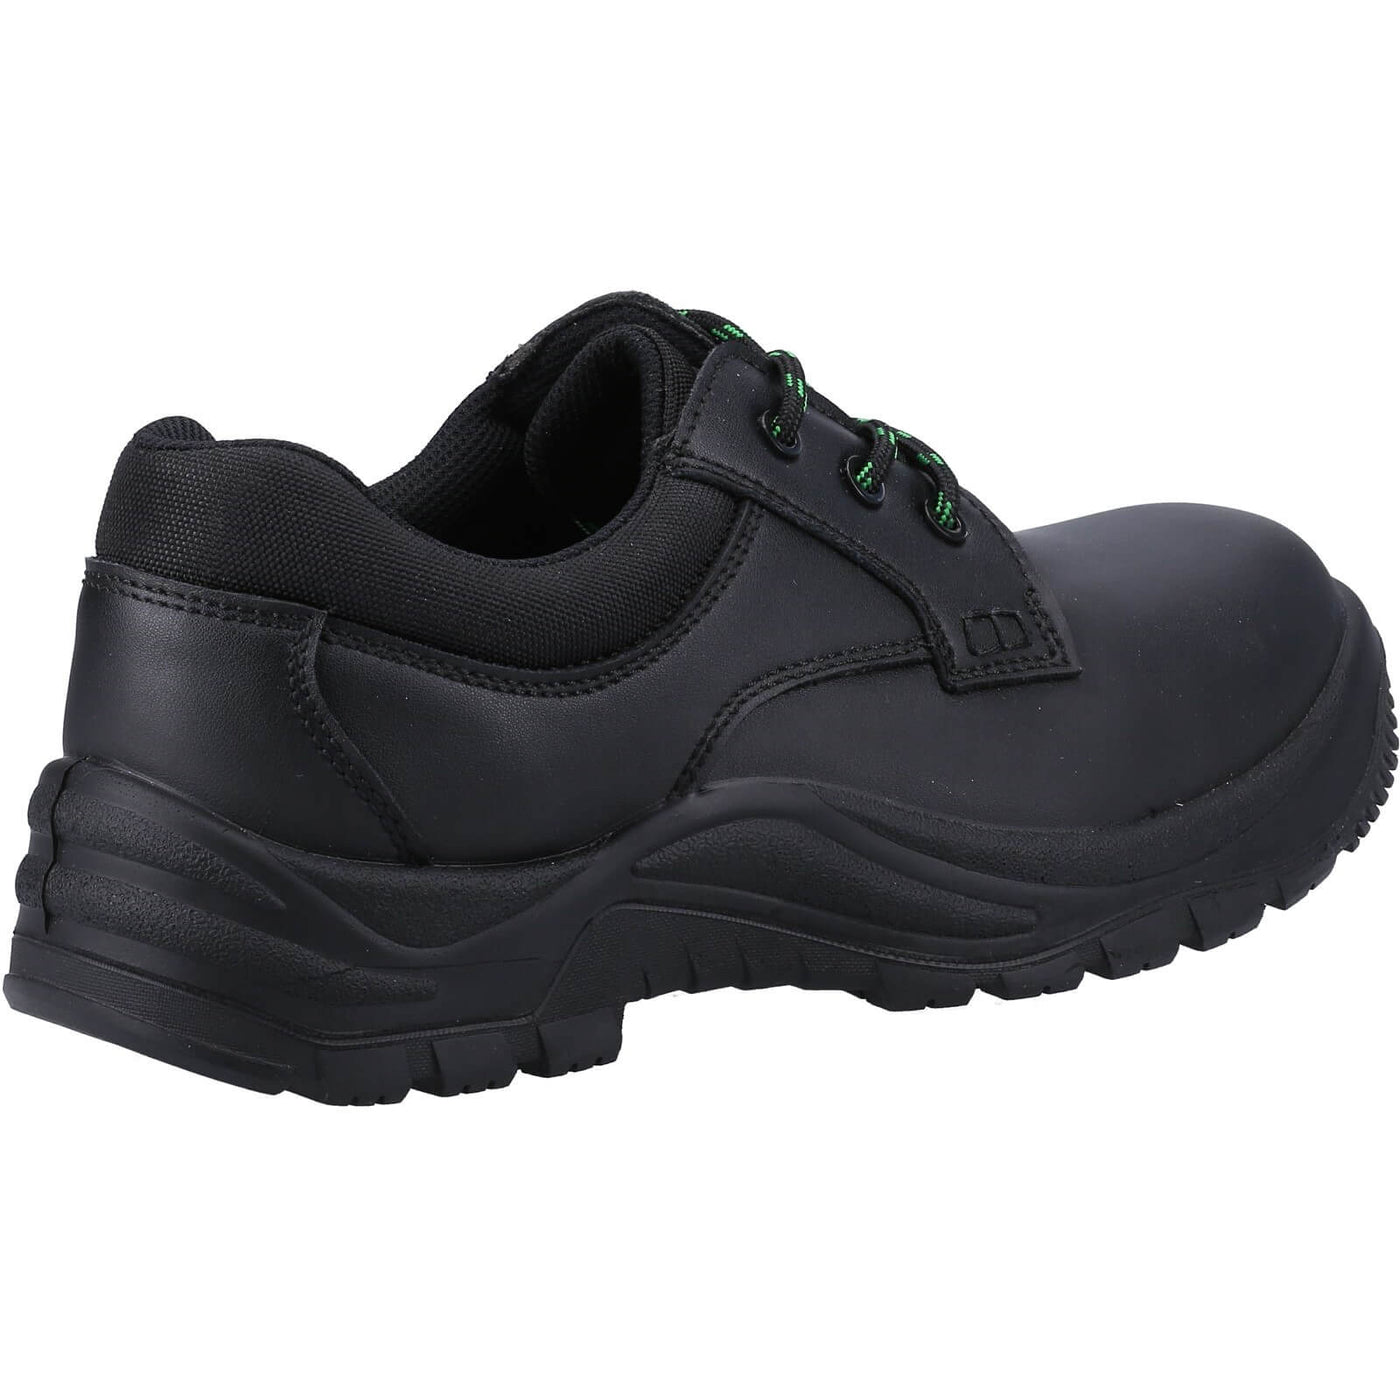 Amblers 504 Metal-Free Safety Shoes Black 2#colour_black